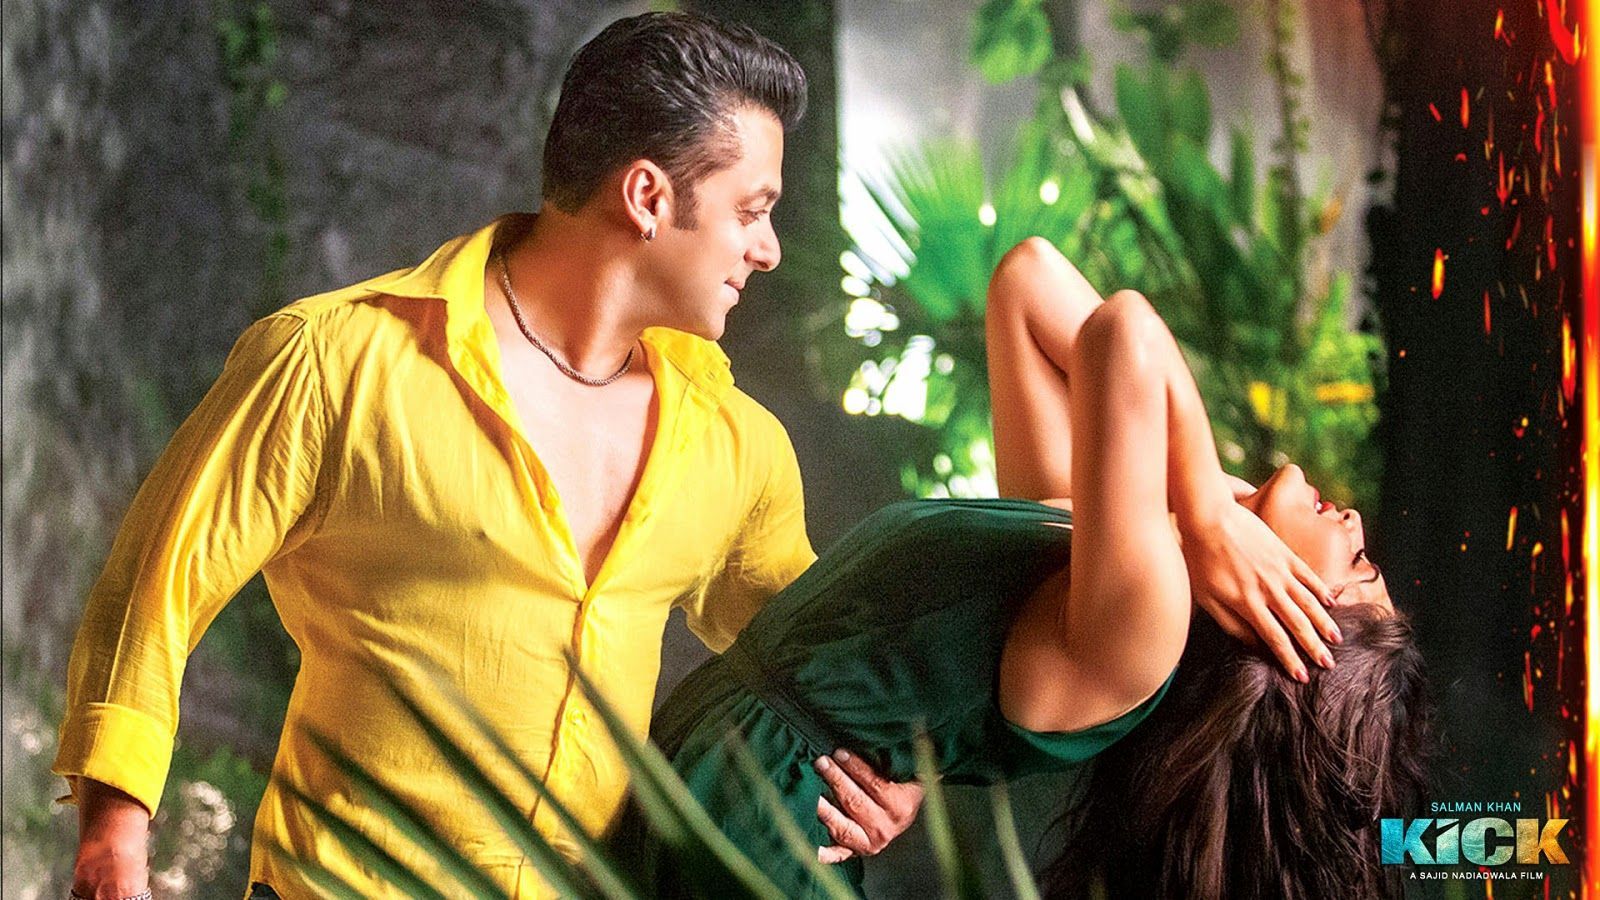 Fine Super HD Wallpaper: Kick. Salman khan, Indian movie songs, Bollywood movie songs